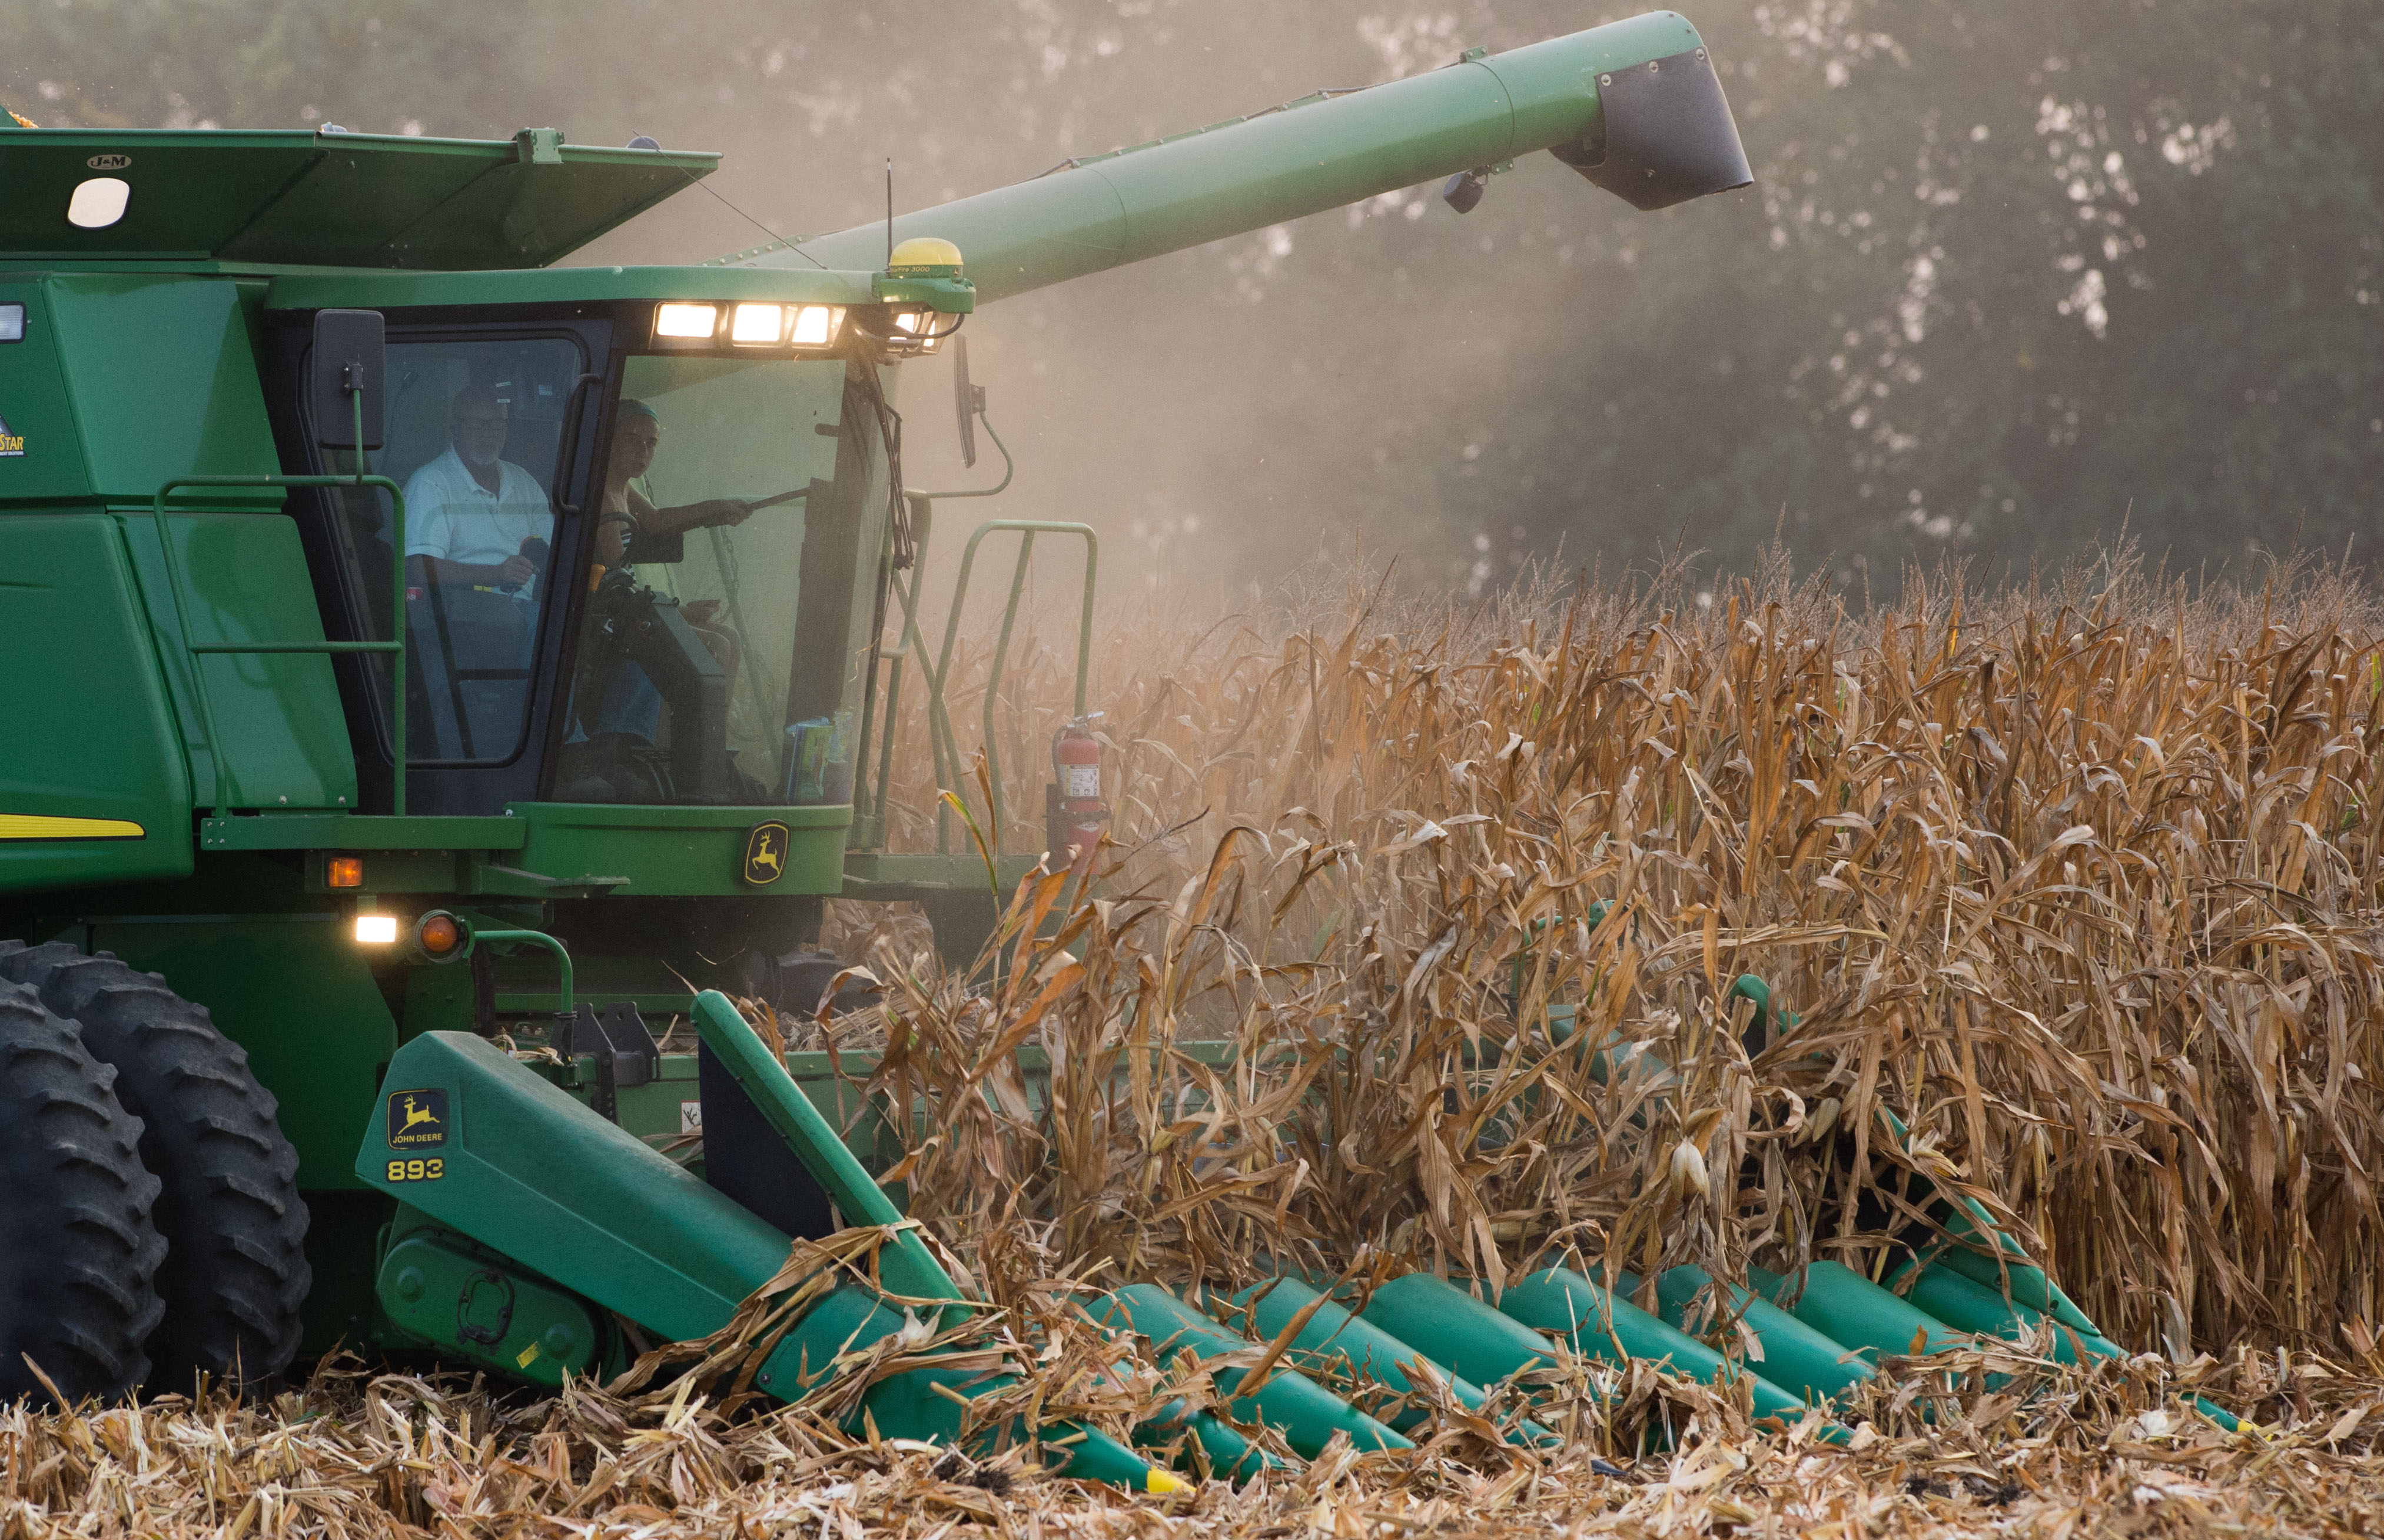 Farmers prefer ‘RP’ insurance - Investigate MidwestInvestigate Midwest